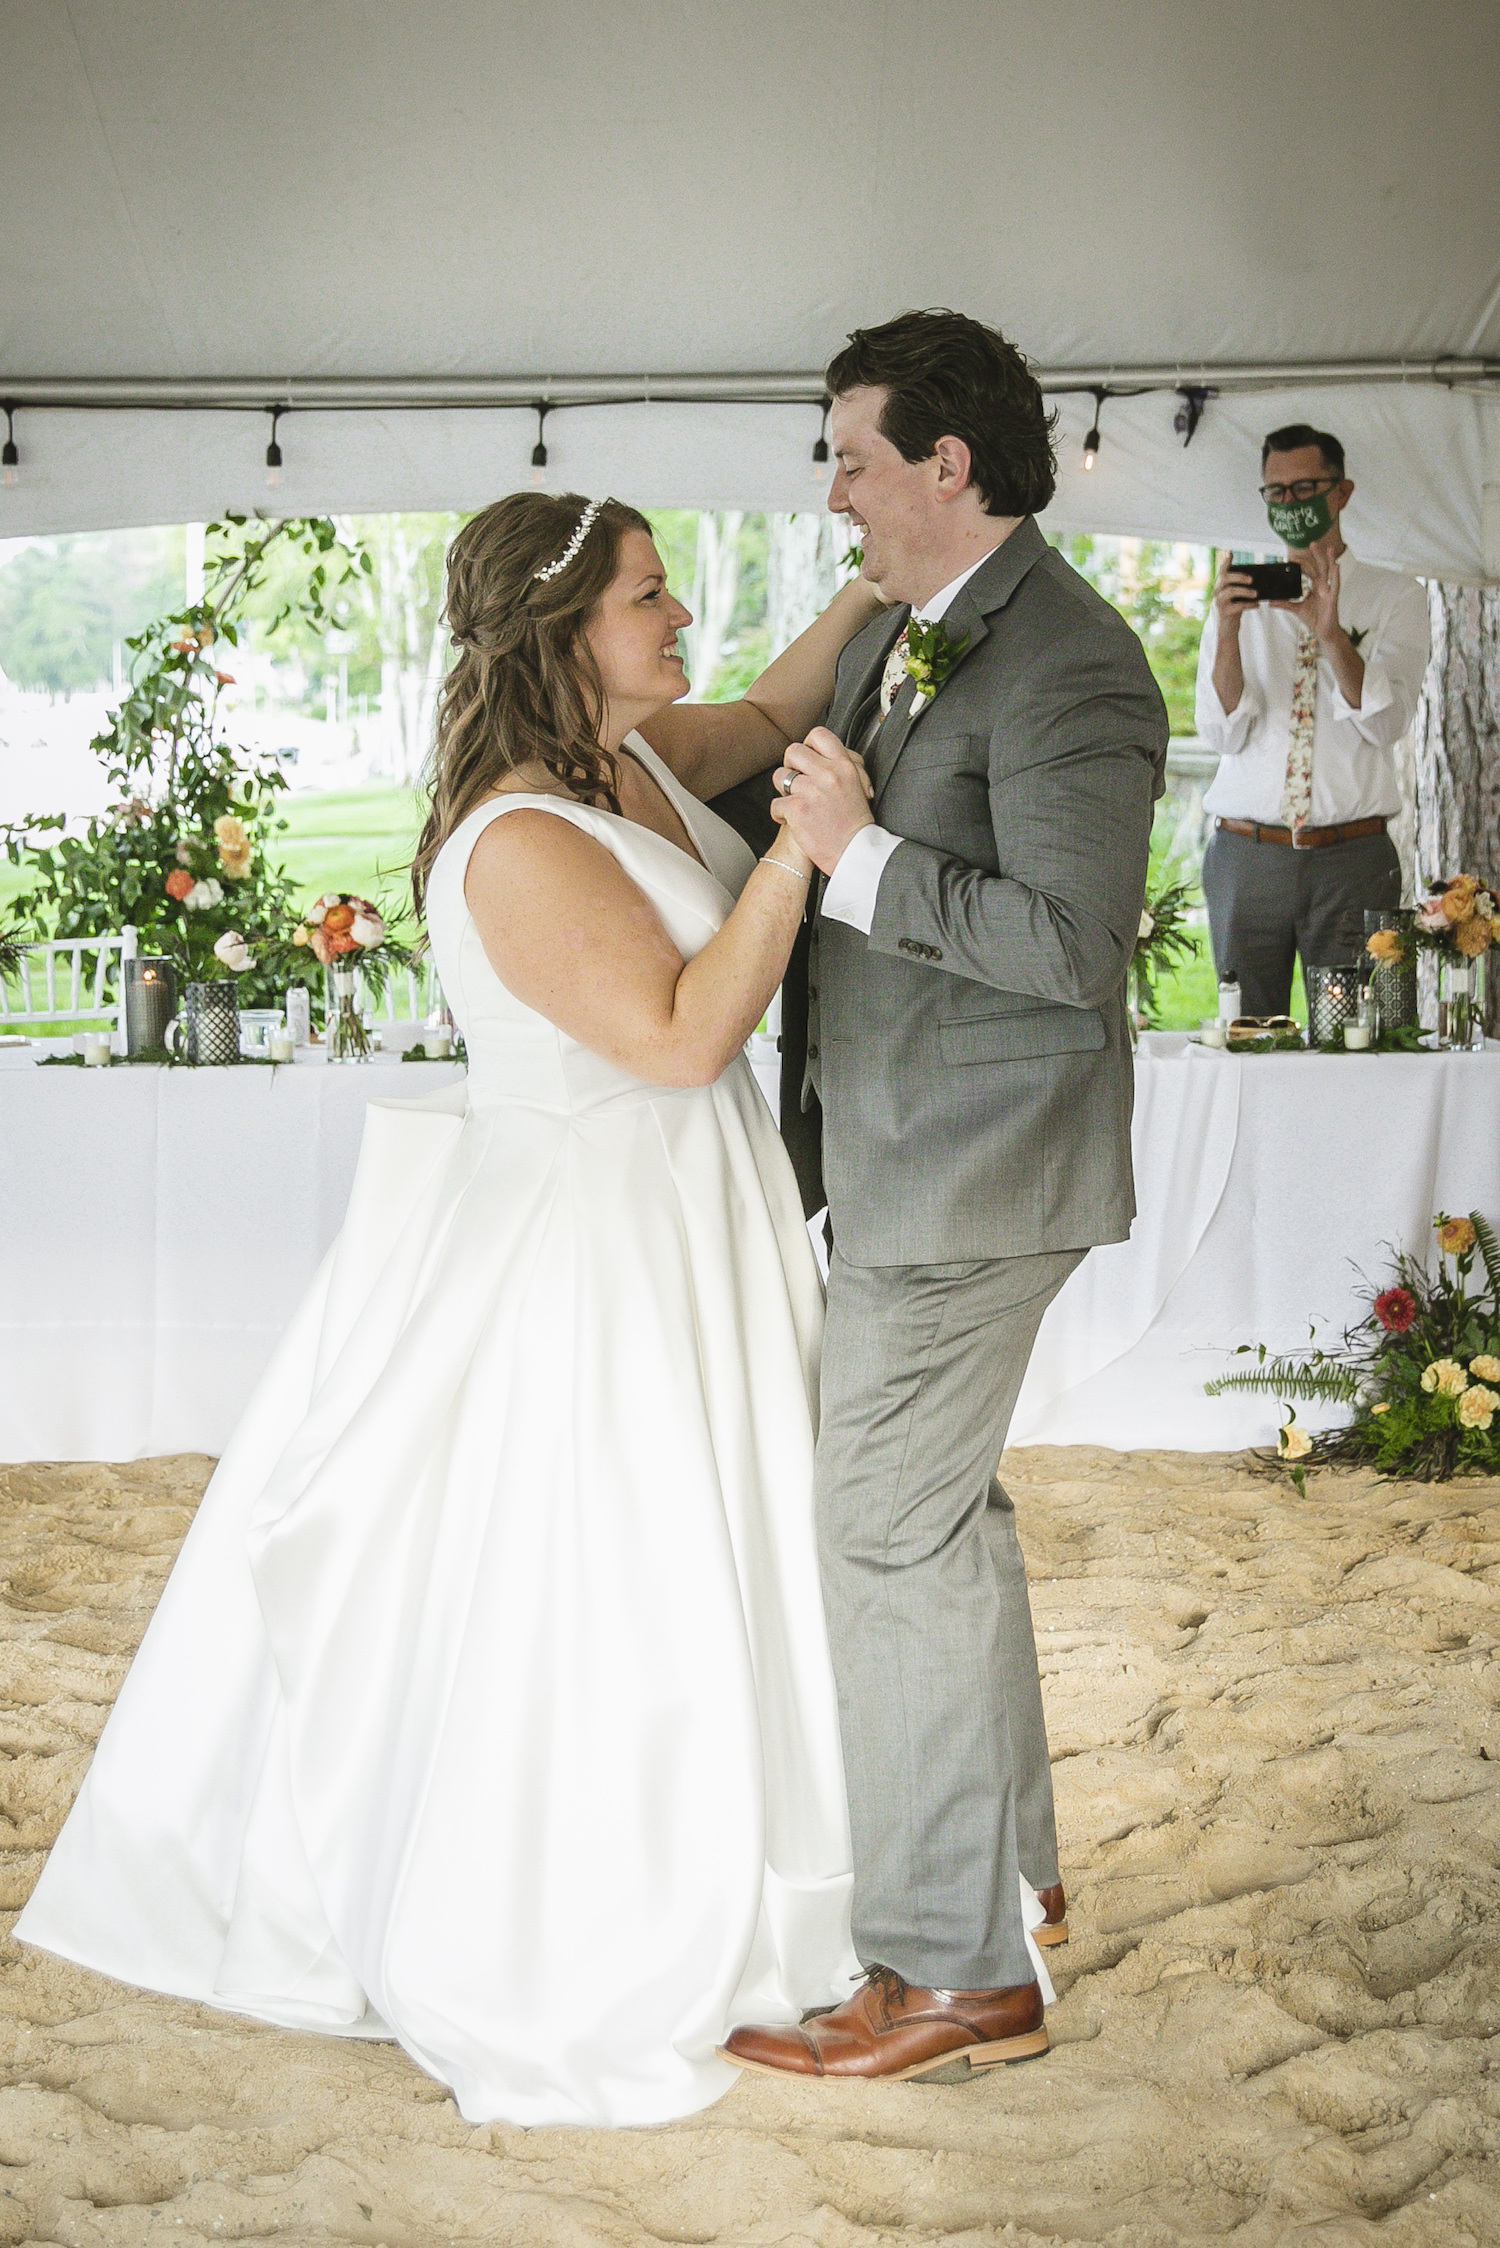 Bride and groom first dance at Higgins lake wedding